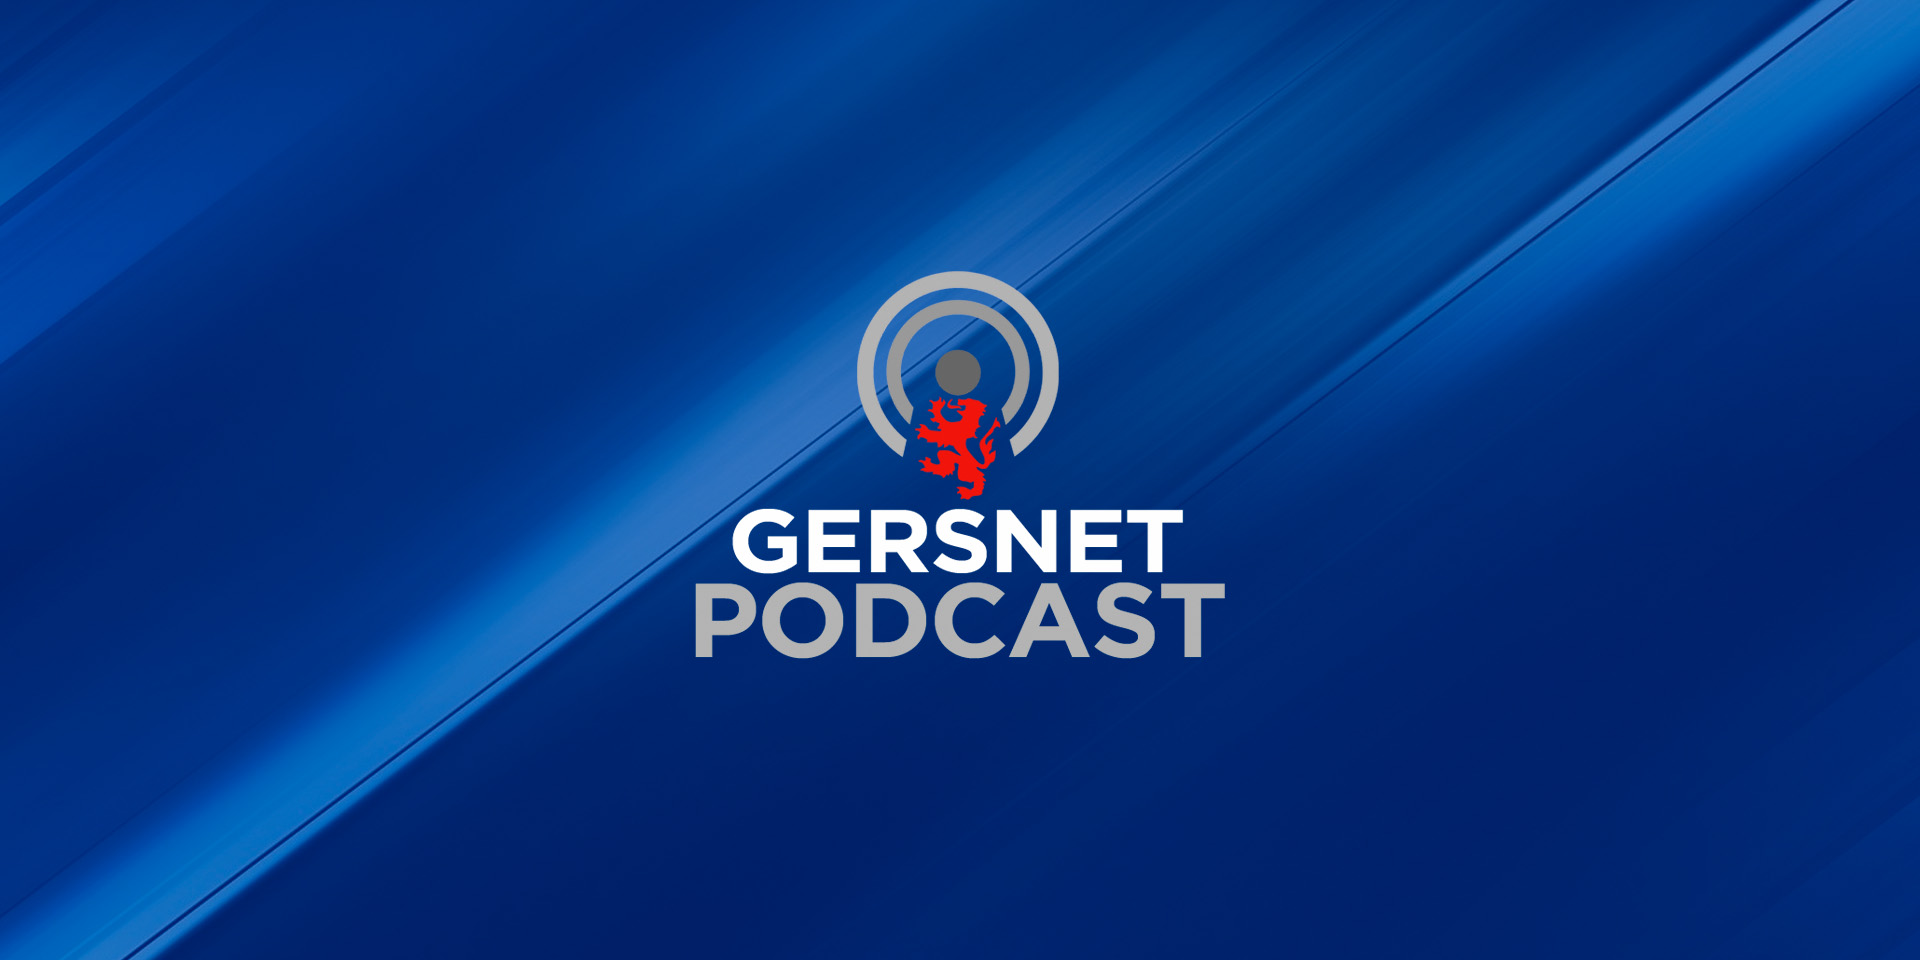 Gersnet Podcast 331 - St Mirren Preview